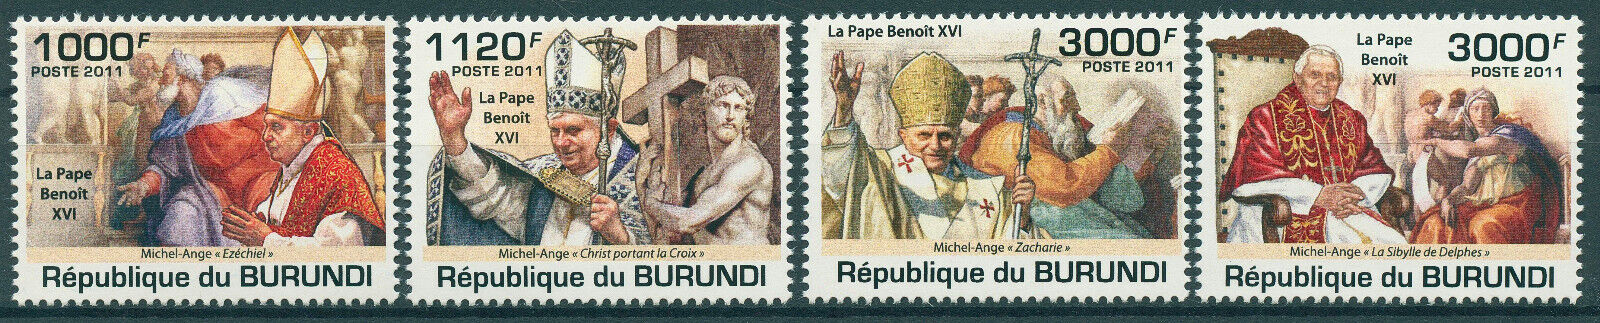 Burundi 2011 MNH Pope Benedict XVI Stamps Michelangelo Art Religion 4v Set